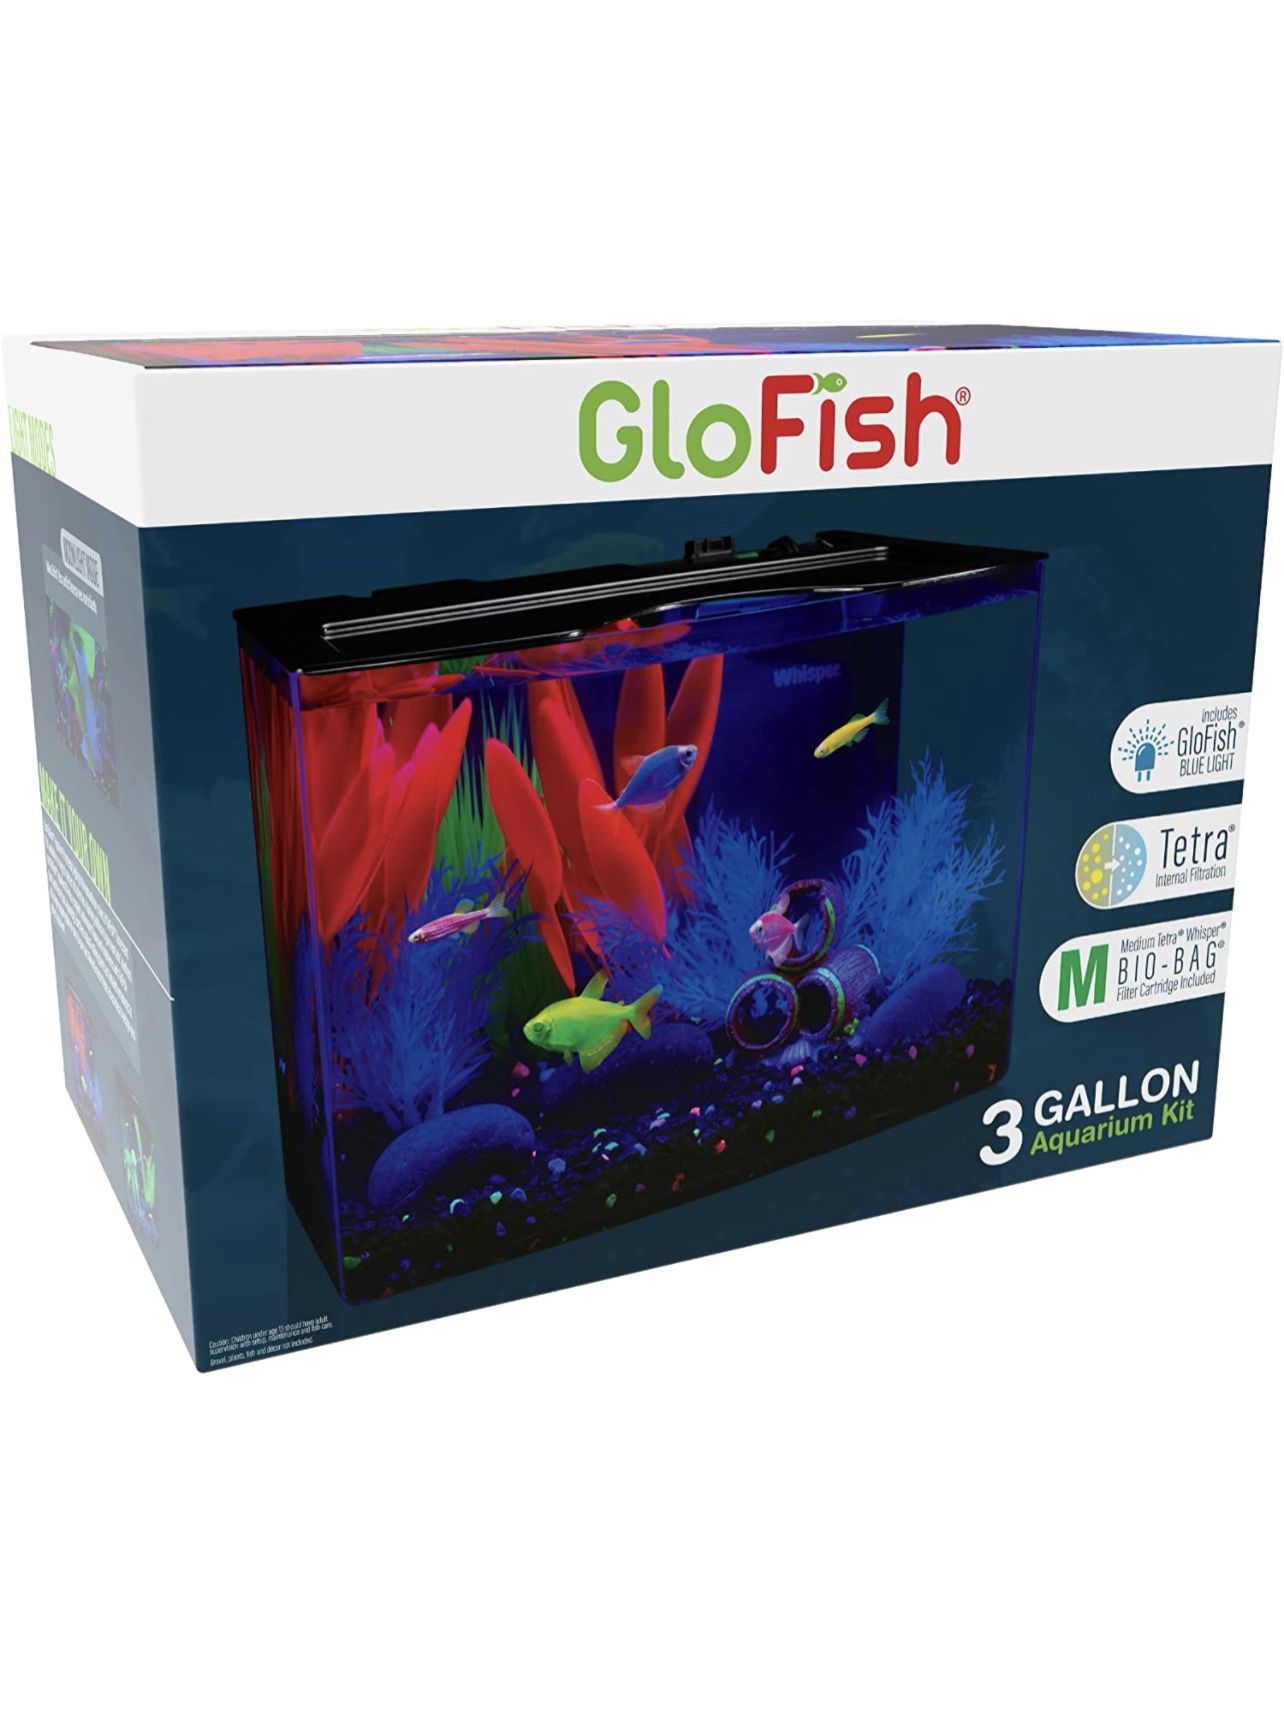 GloFish Crescent aquarium Kit 3 Gallons, Includes Hidden Blue LED Light And Internal Filter